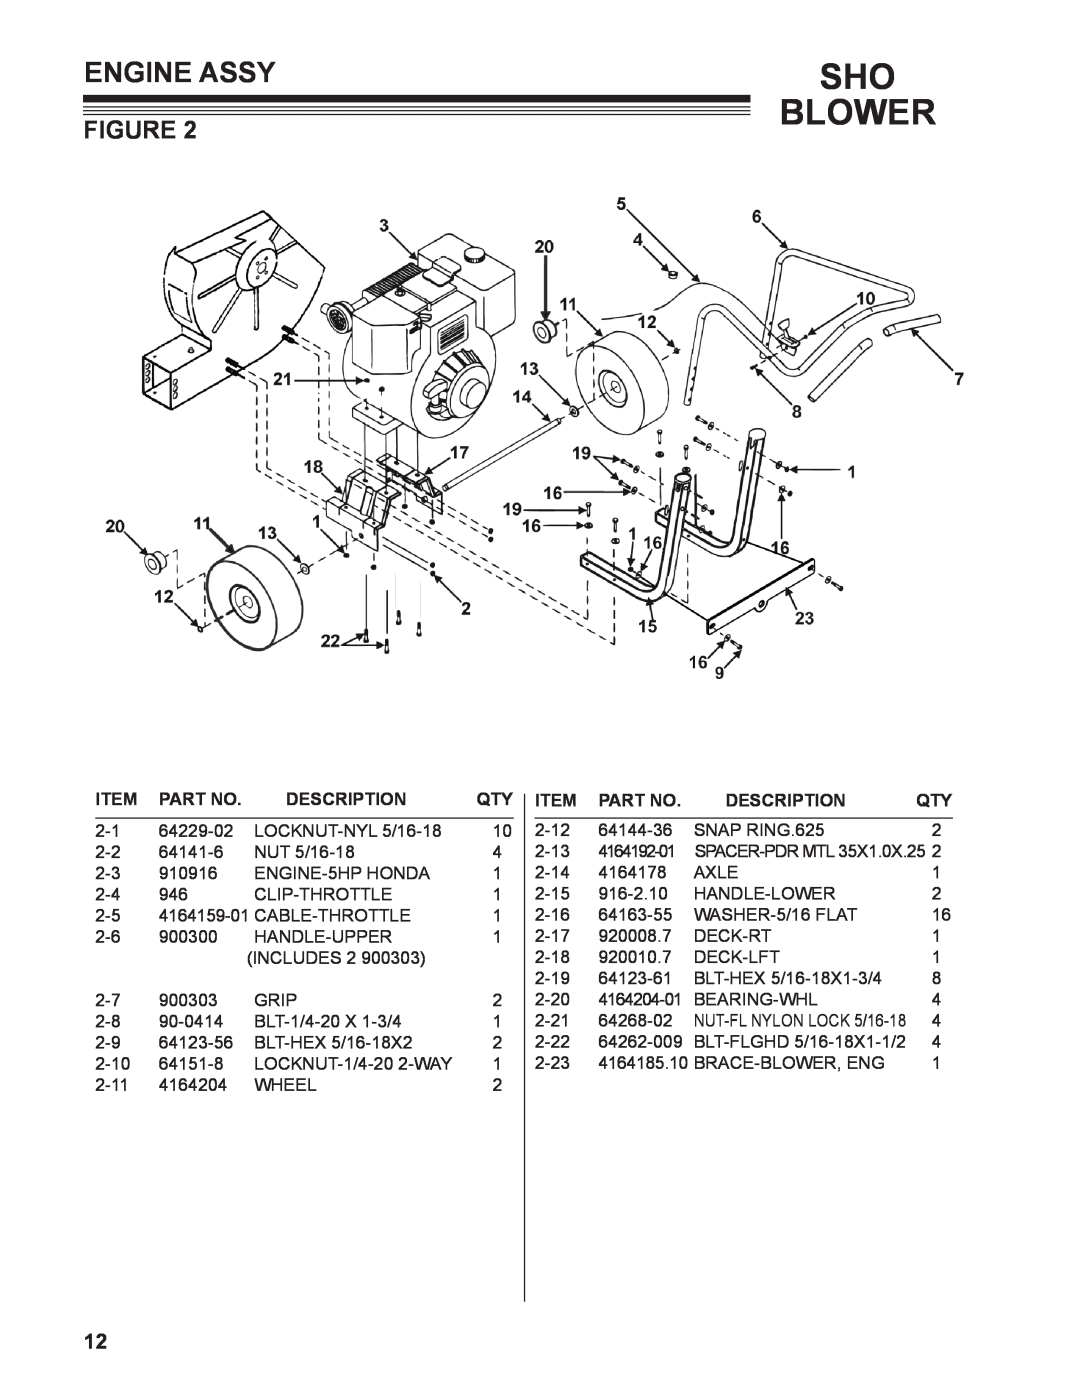 Little Wonder 9502-00-01 technical manual Engine Assy, Sho Blower, Description, NUT-FL NYLON LOCK 5/16-18 